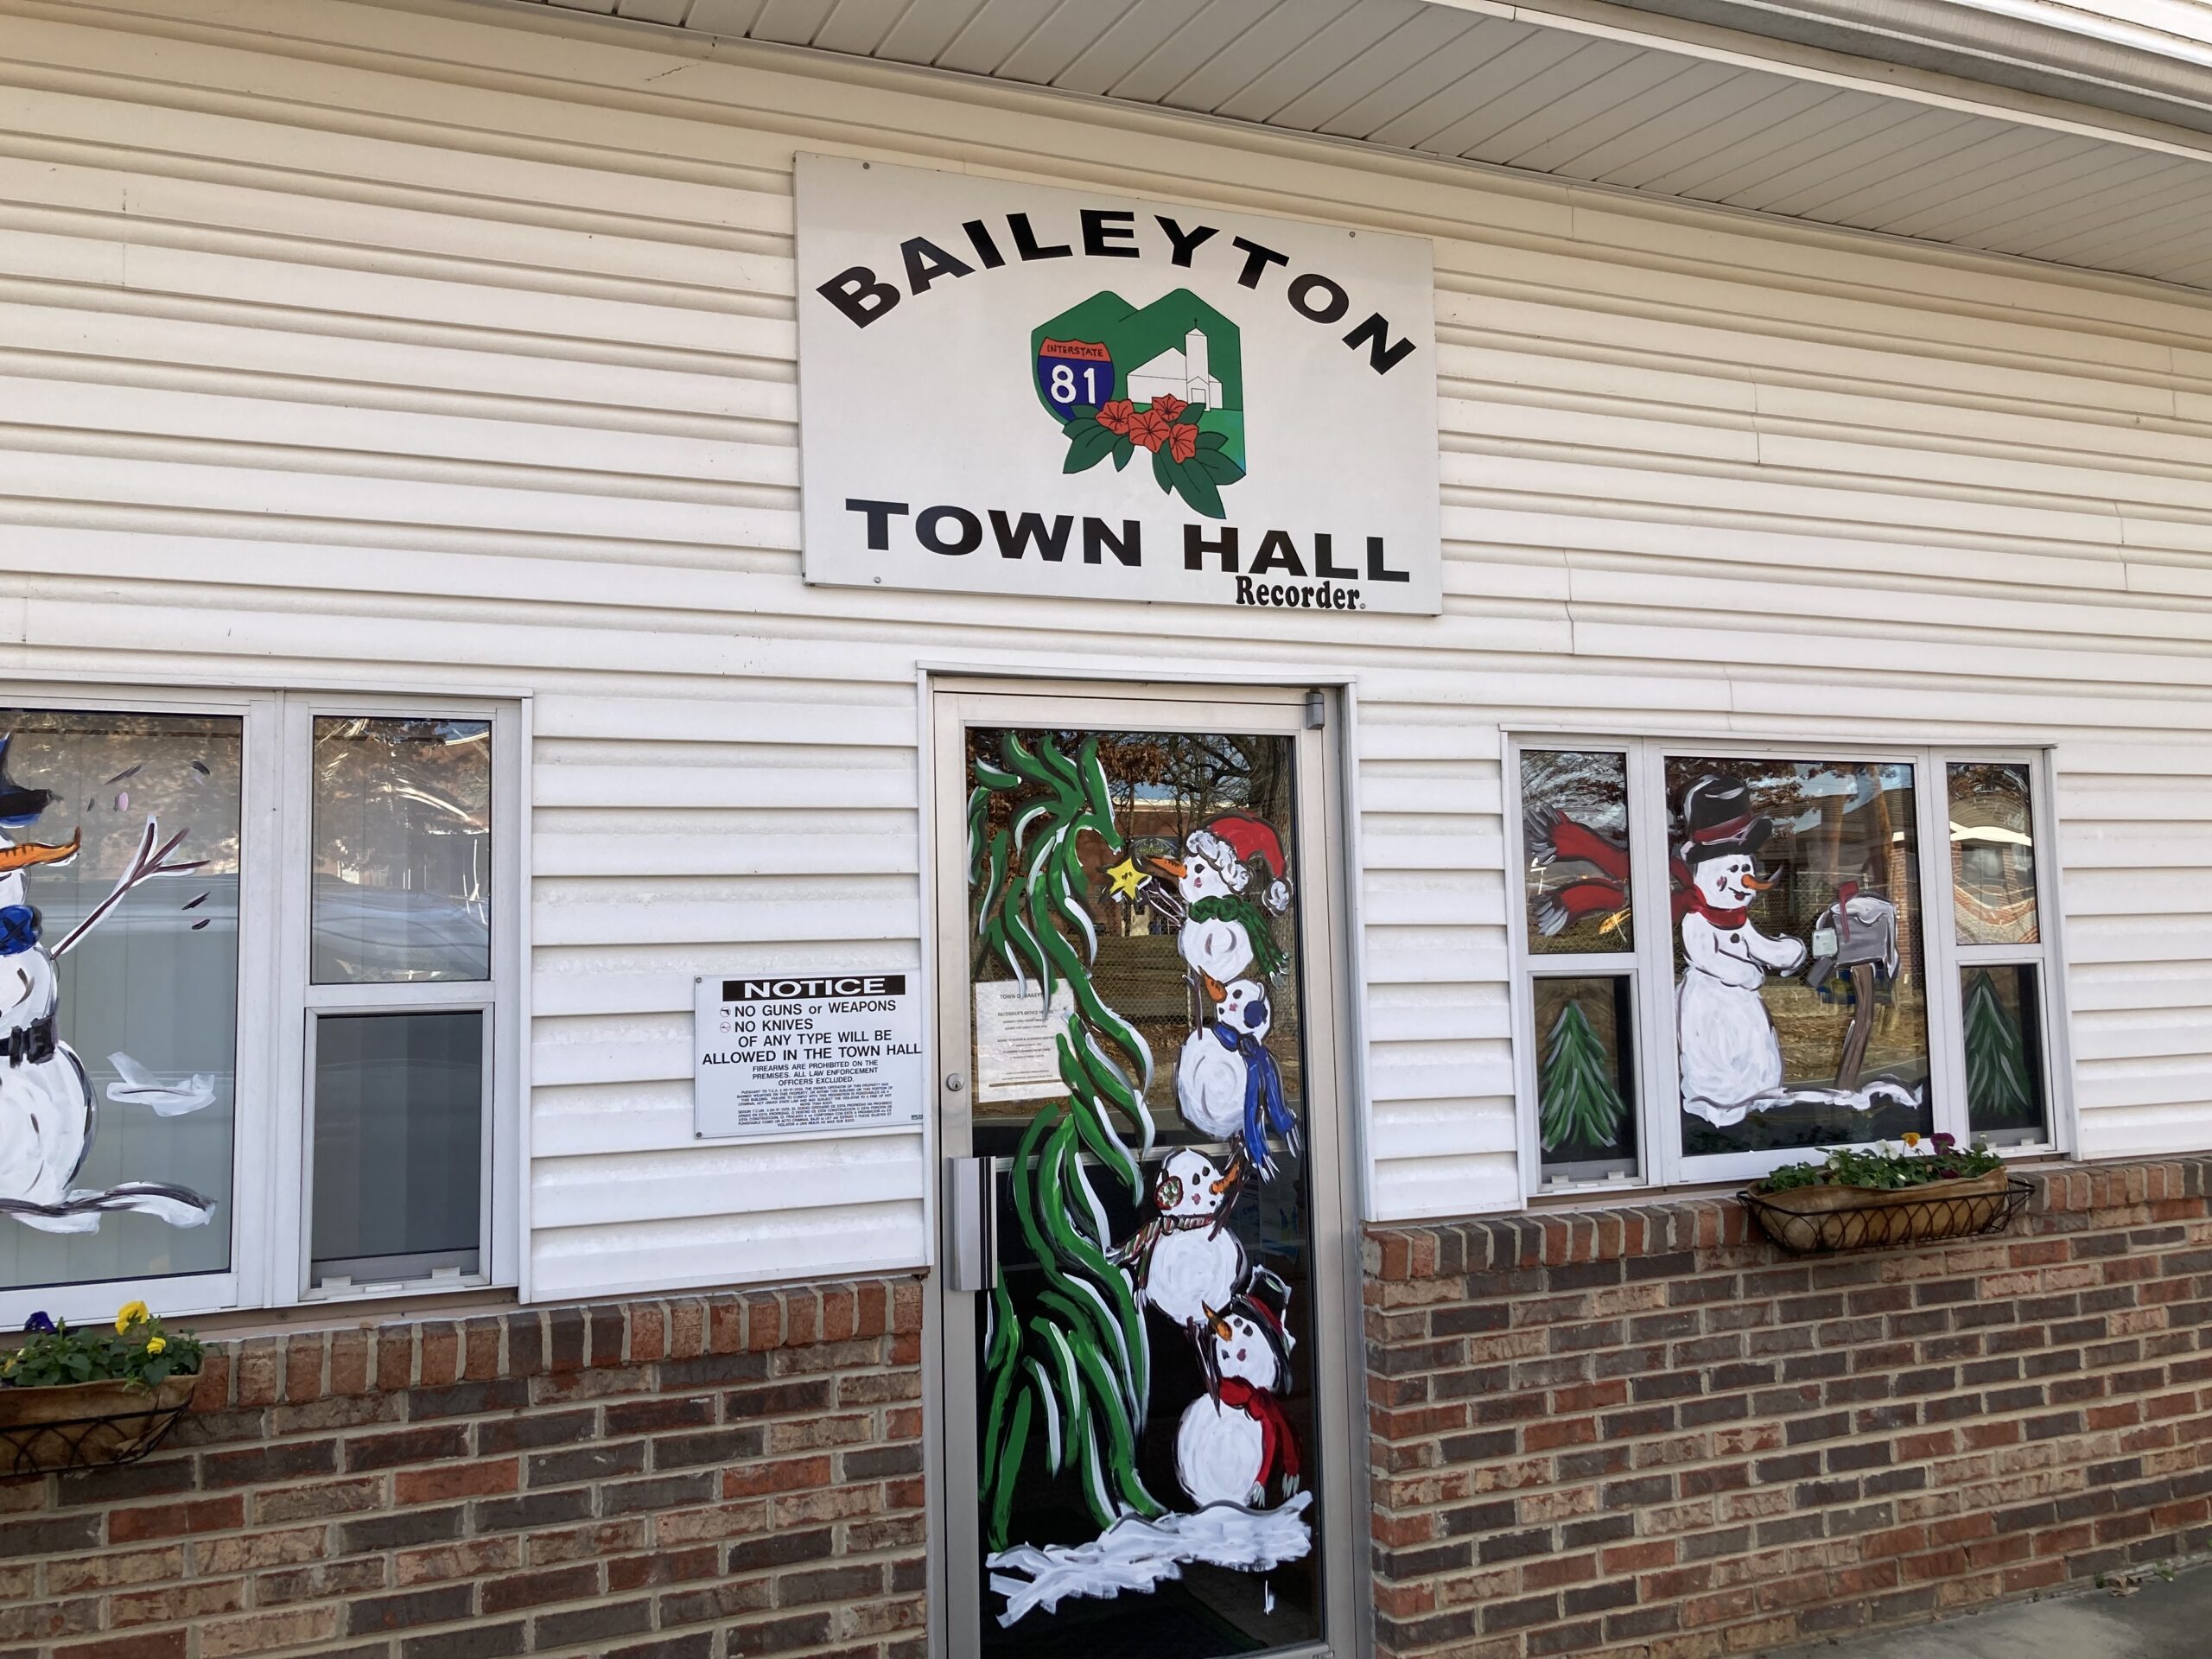 Greene County Mobile Vehicle Registration - Baileyton